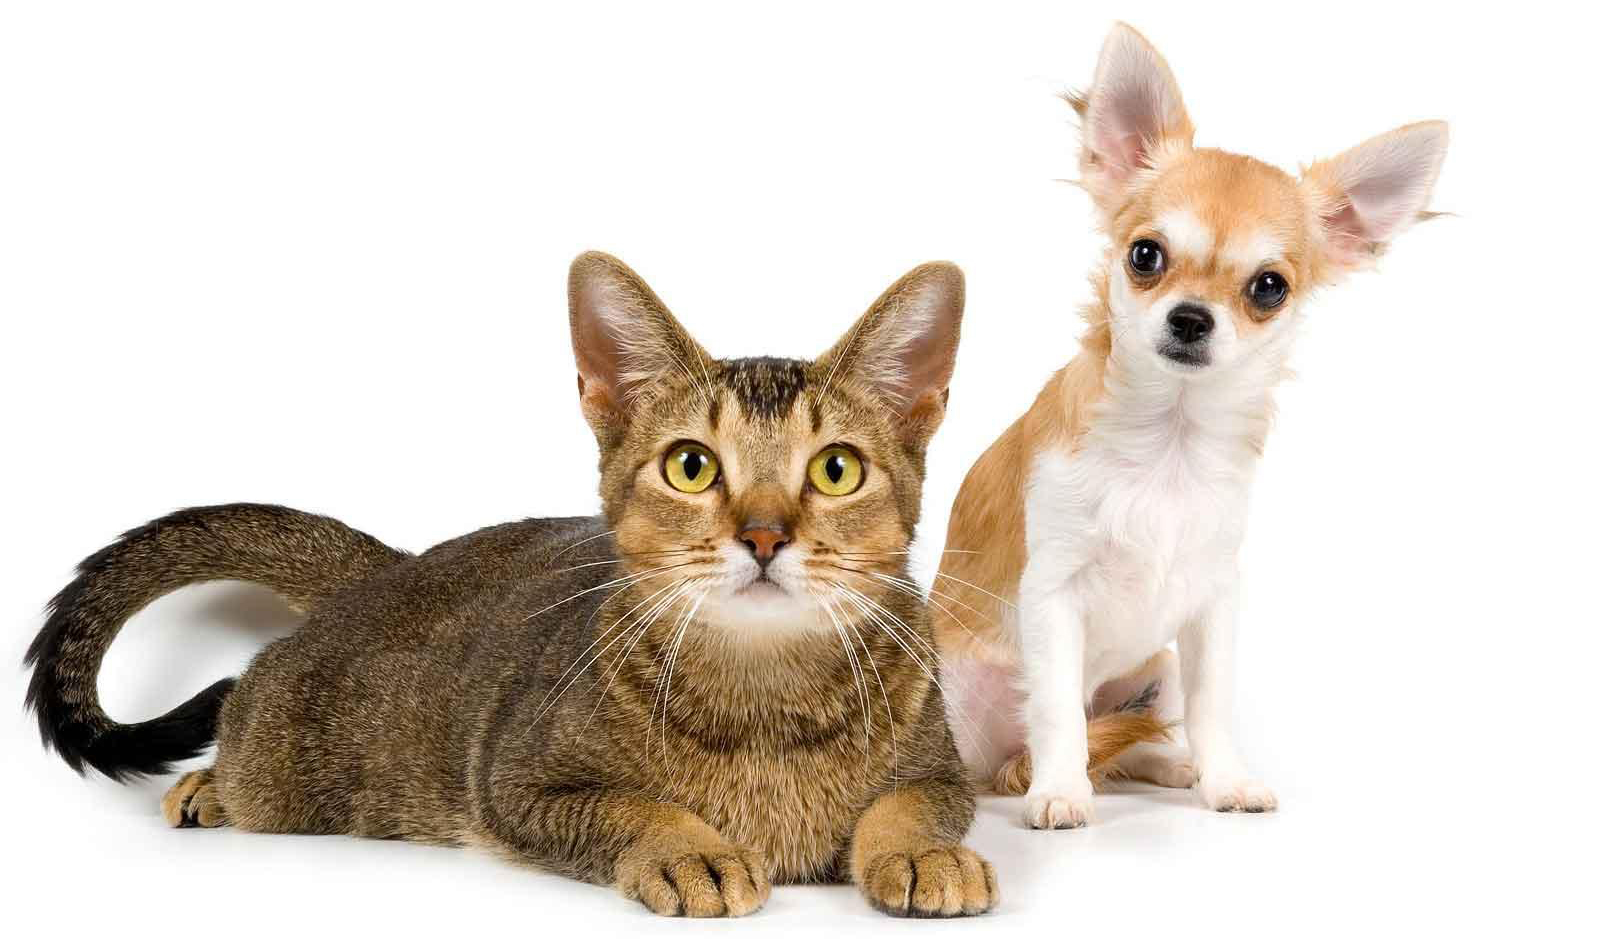 mobile desktop background cats and dog images download